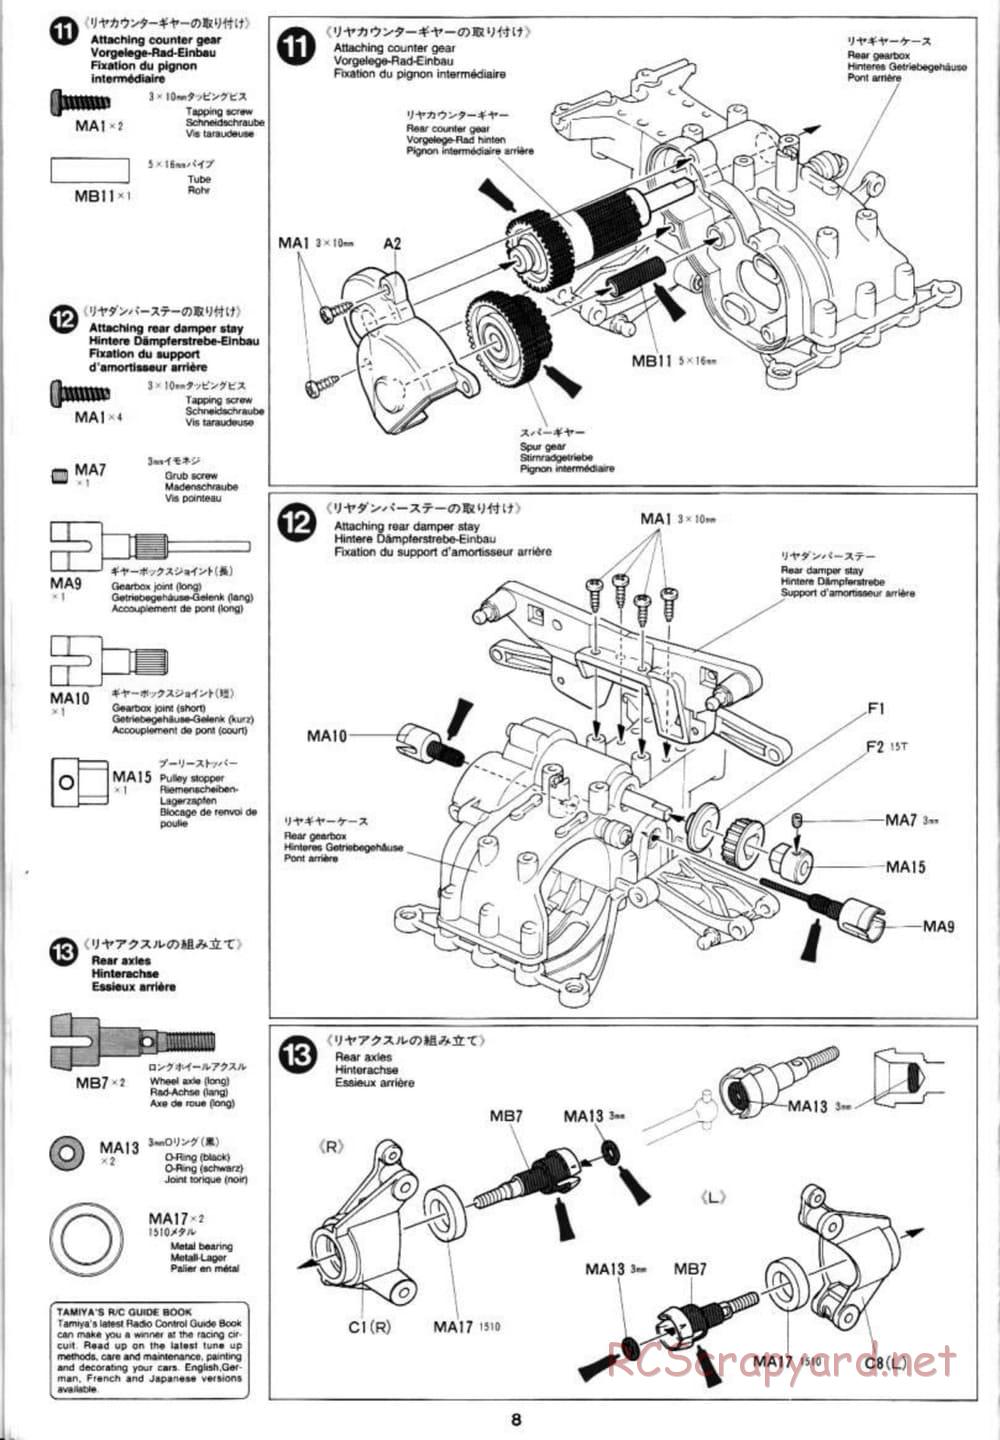 Tamiya - PIAA Porsche 911 - TA-03RS Chassis - Manual - Page 8